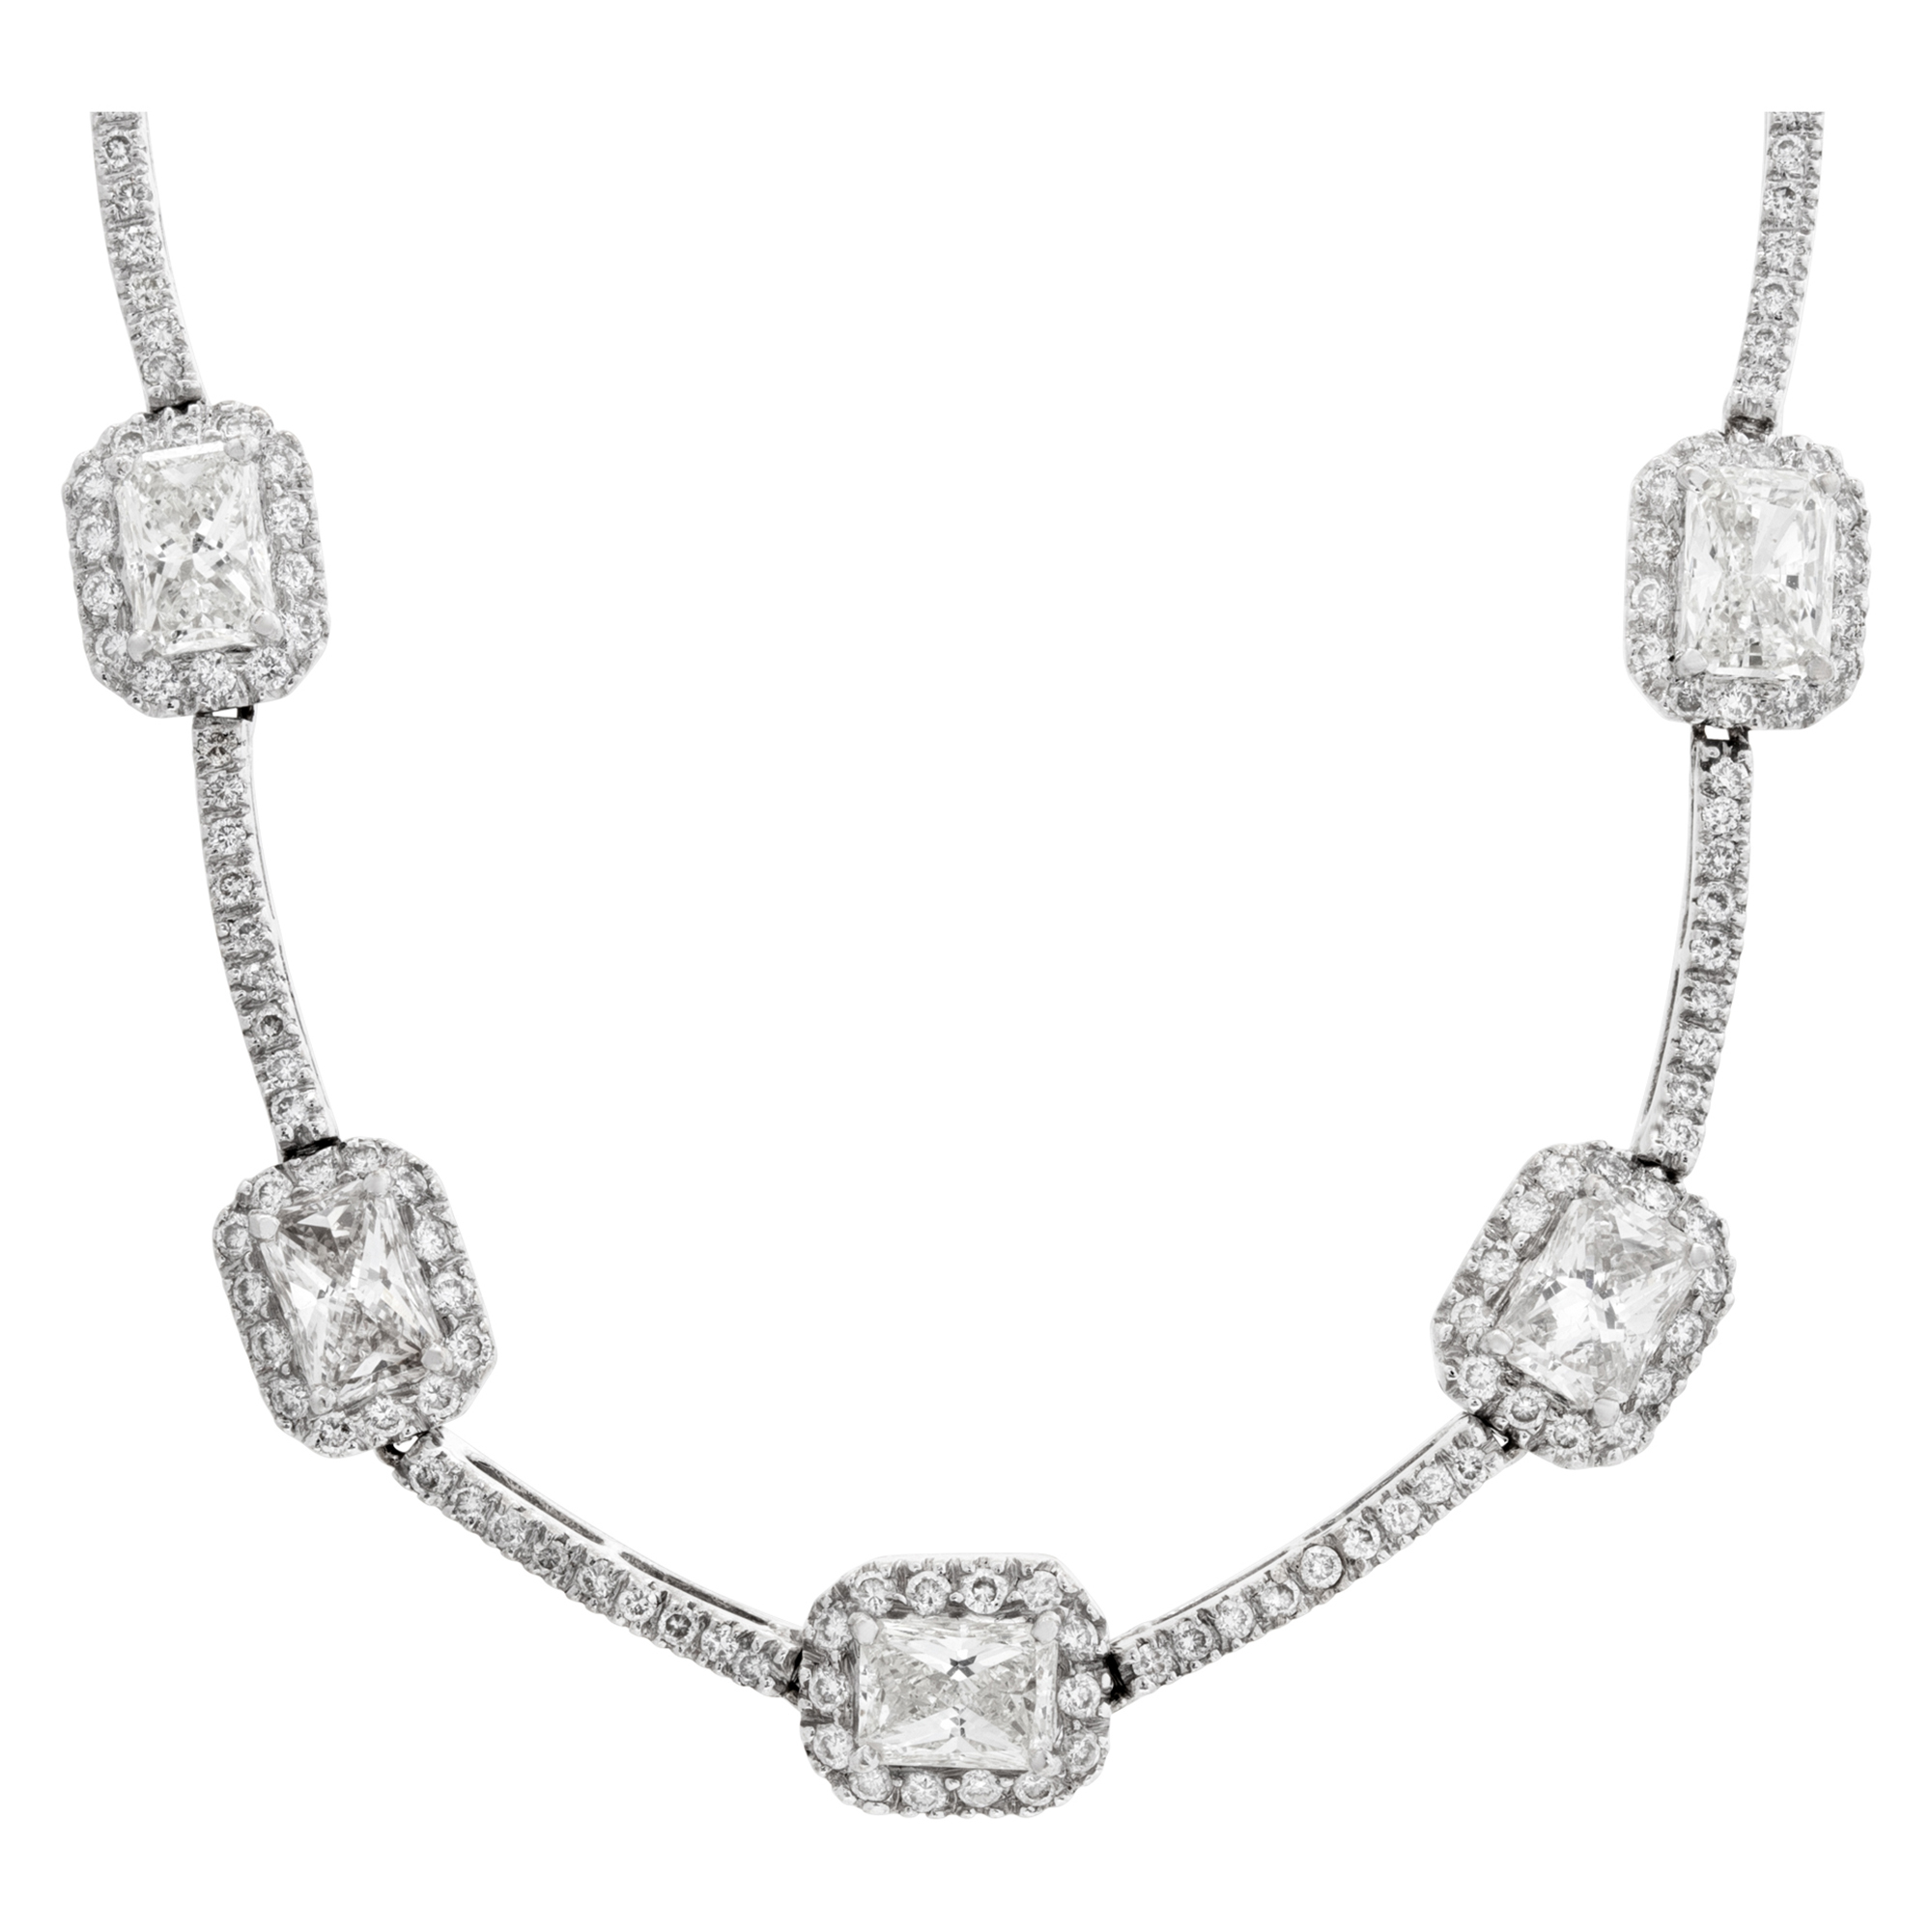 "ILLUSION" diamond necklace set in 18k white gold